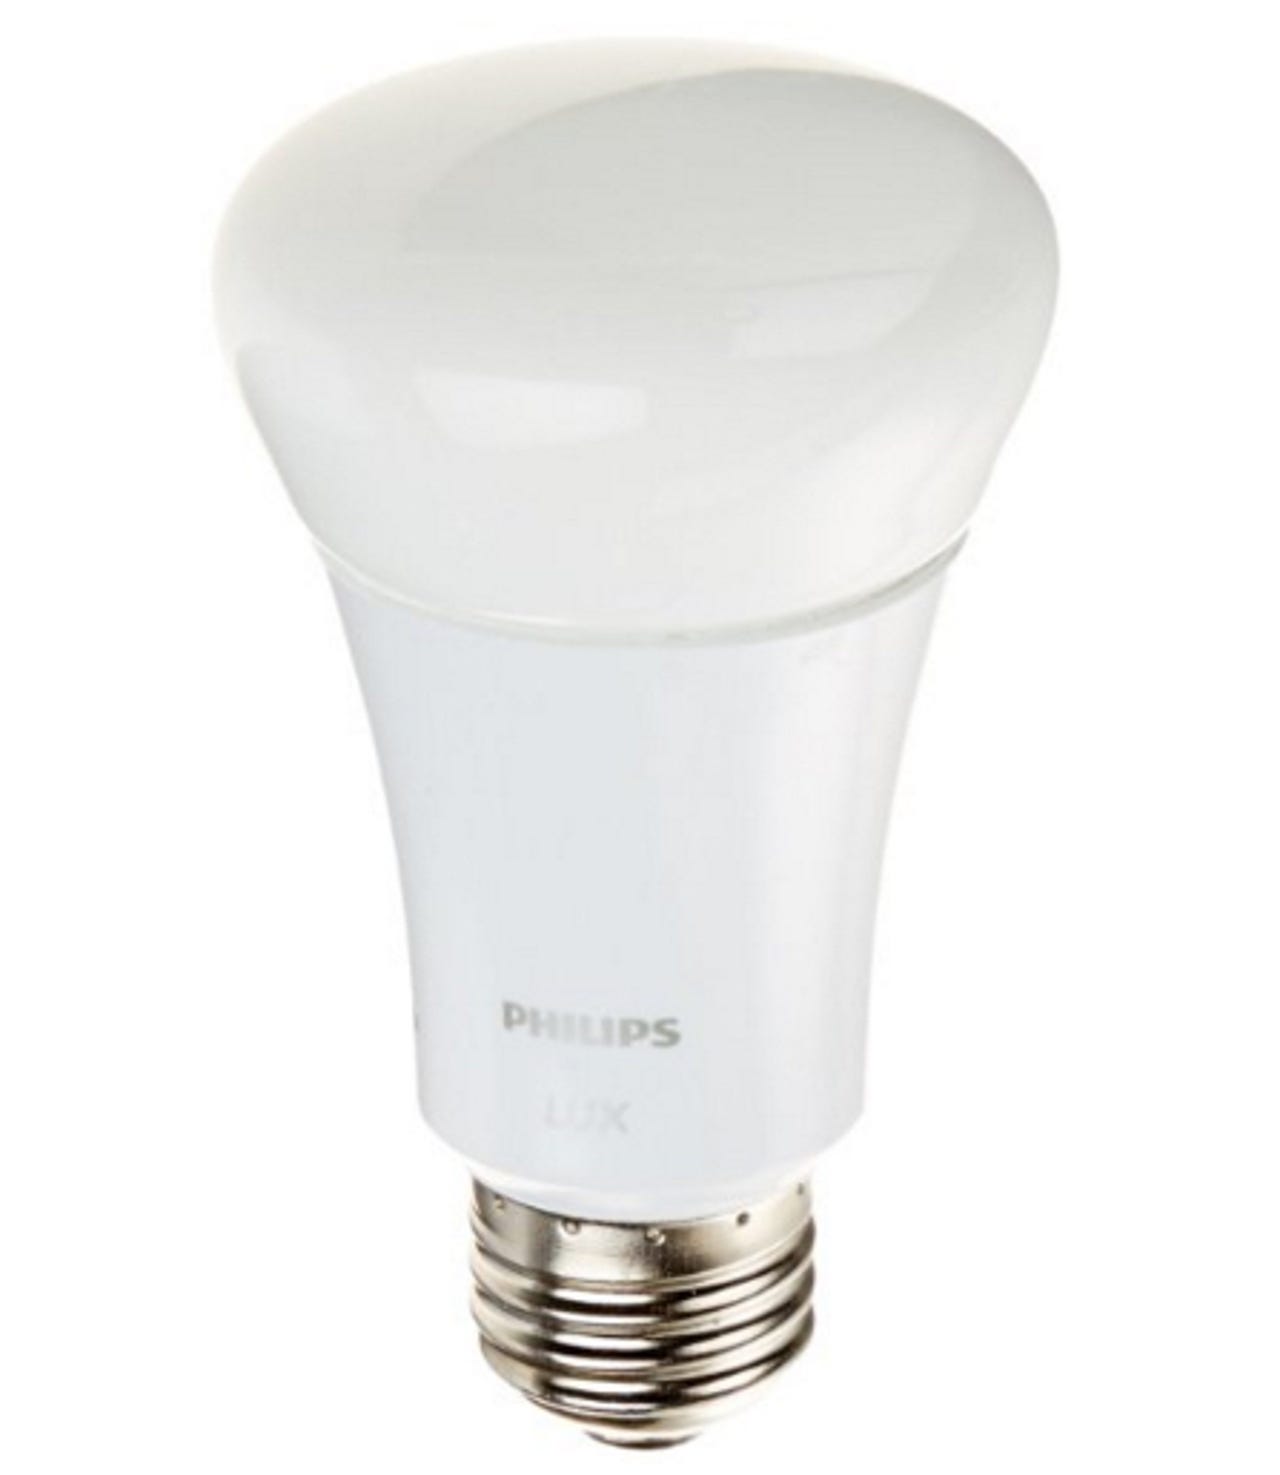 philips-452722-9w-60-watt-a19-hue-lux-connected-home-led-light-bulb-amazon-com-2015-12-13-16-09-47.jpg